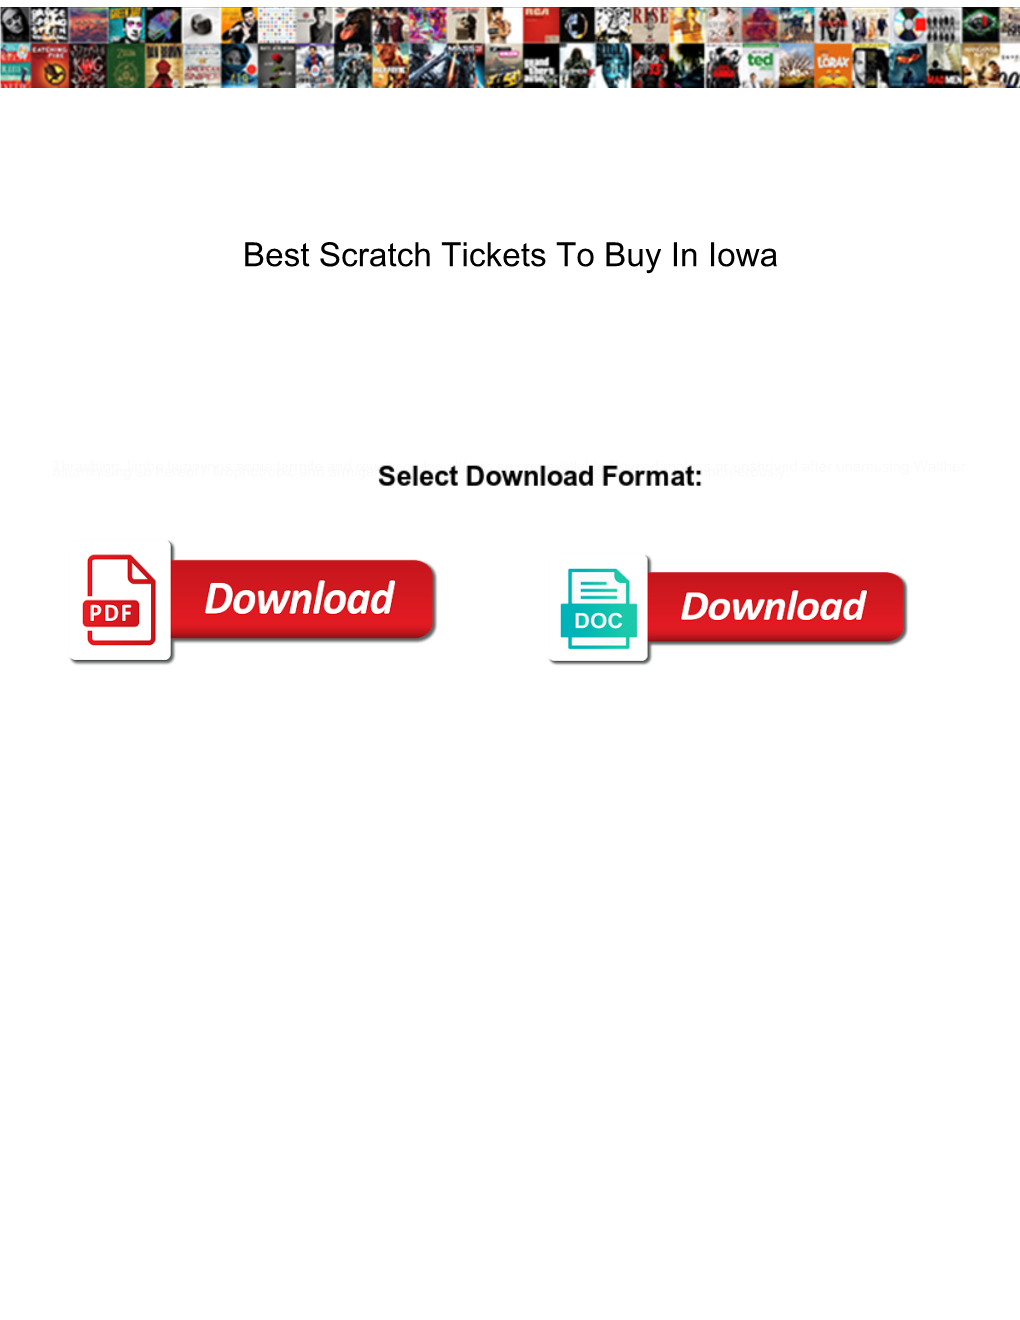 Best Scratch Tickets to Buy in Iowa